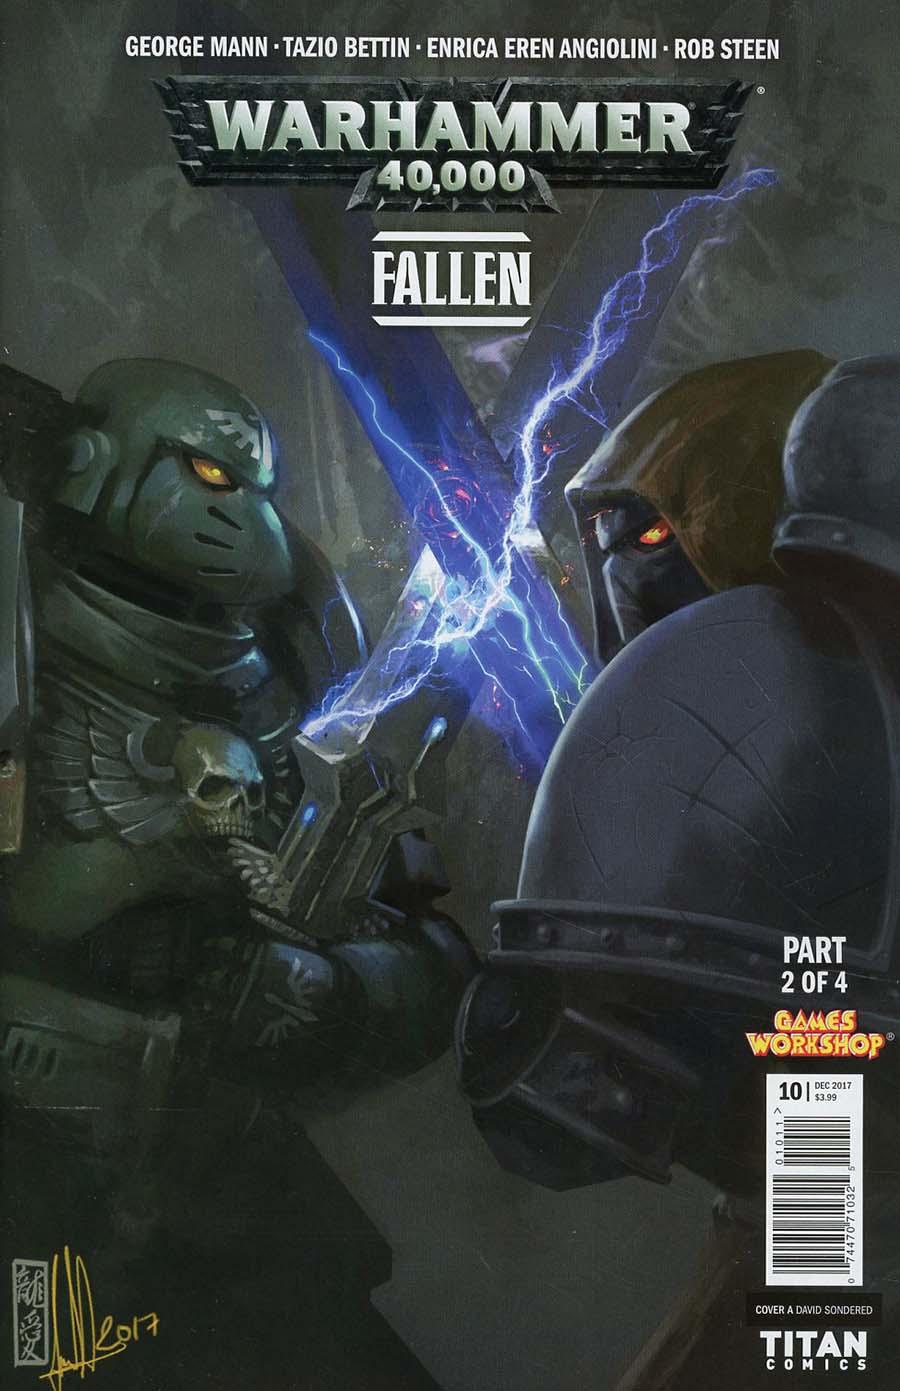 Warhammer 40000 Fallen Vol. 1 #2